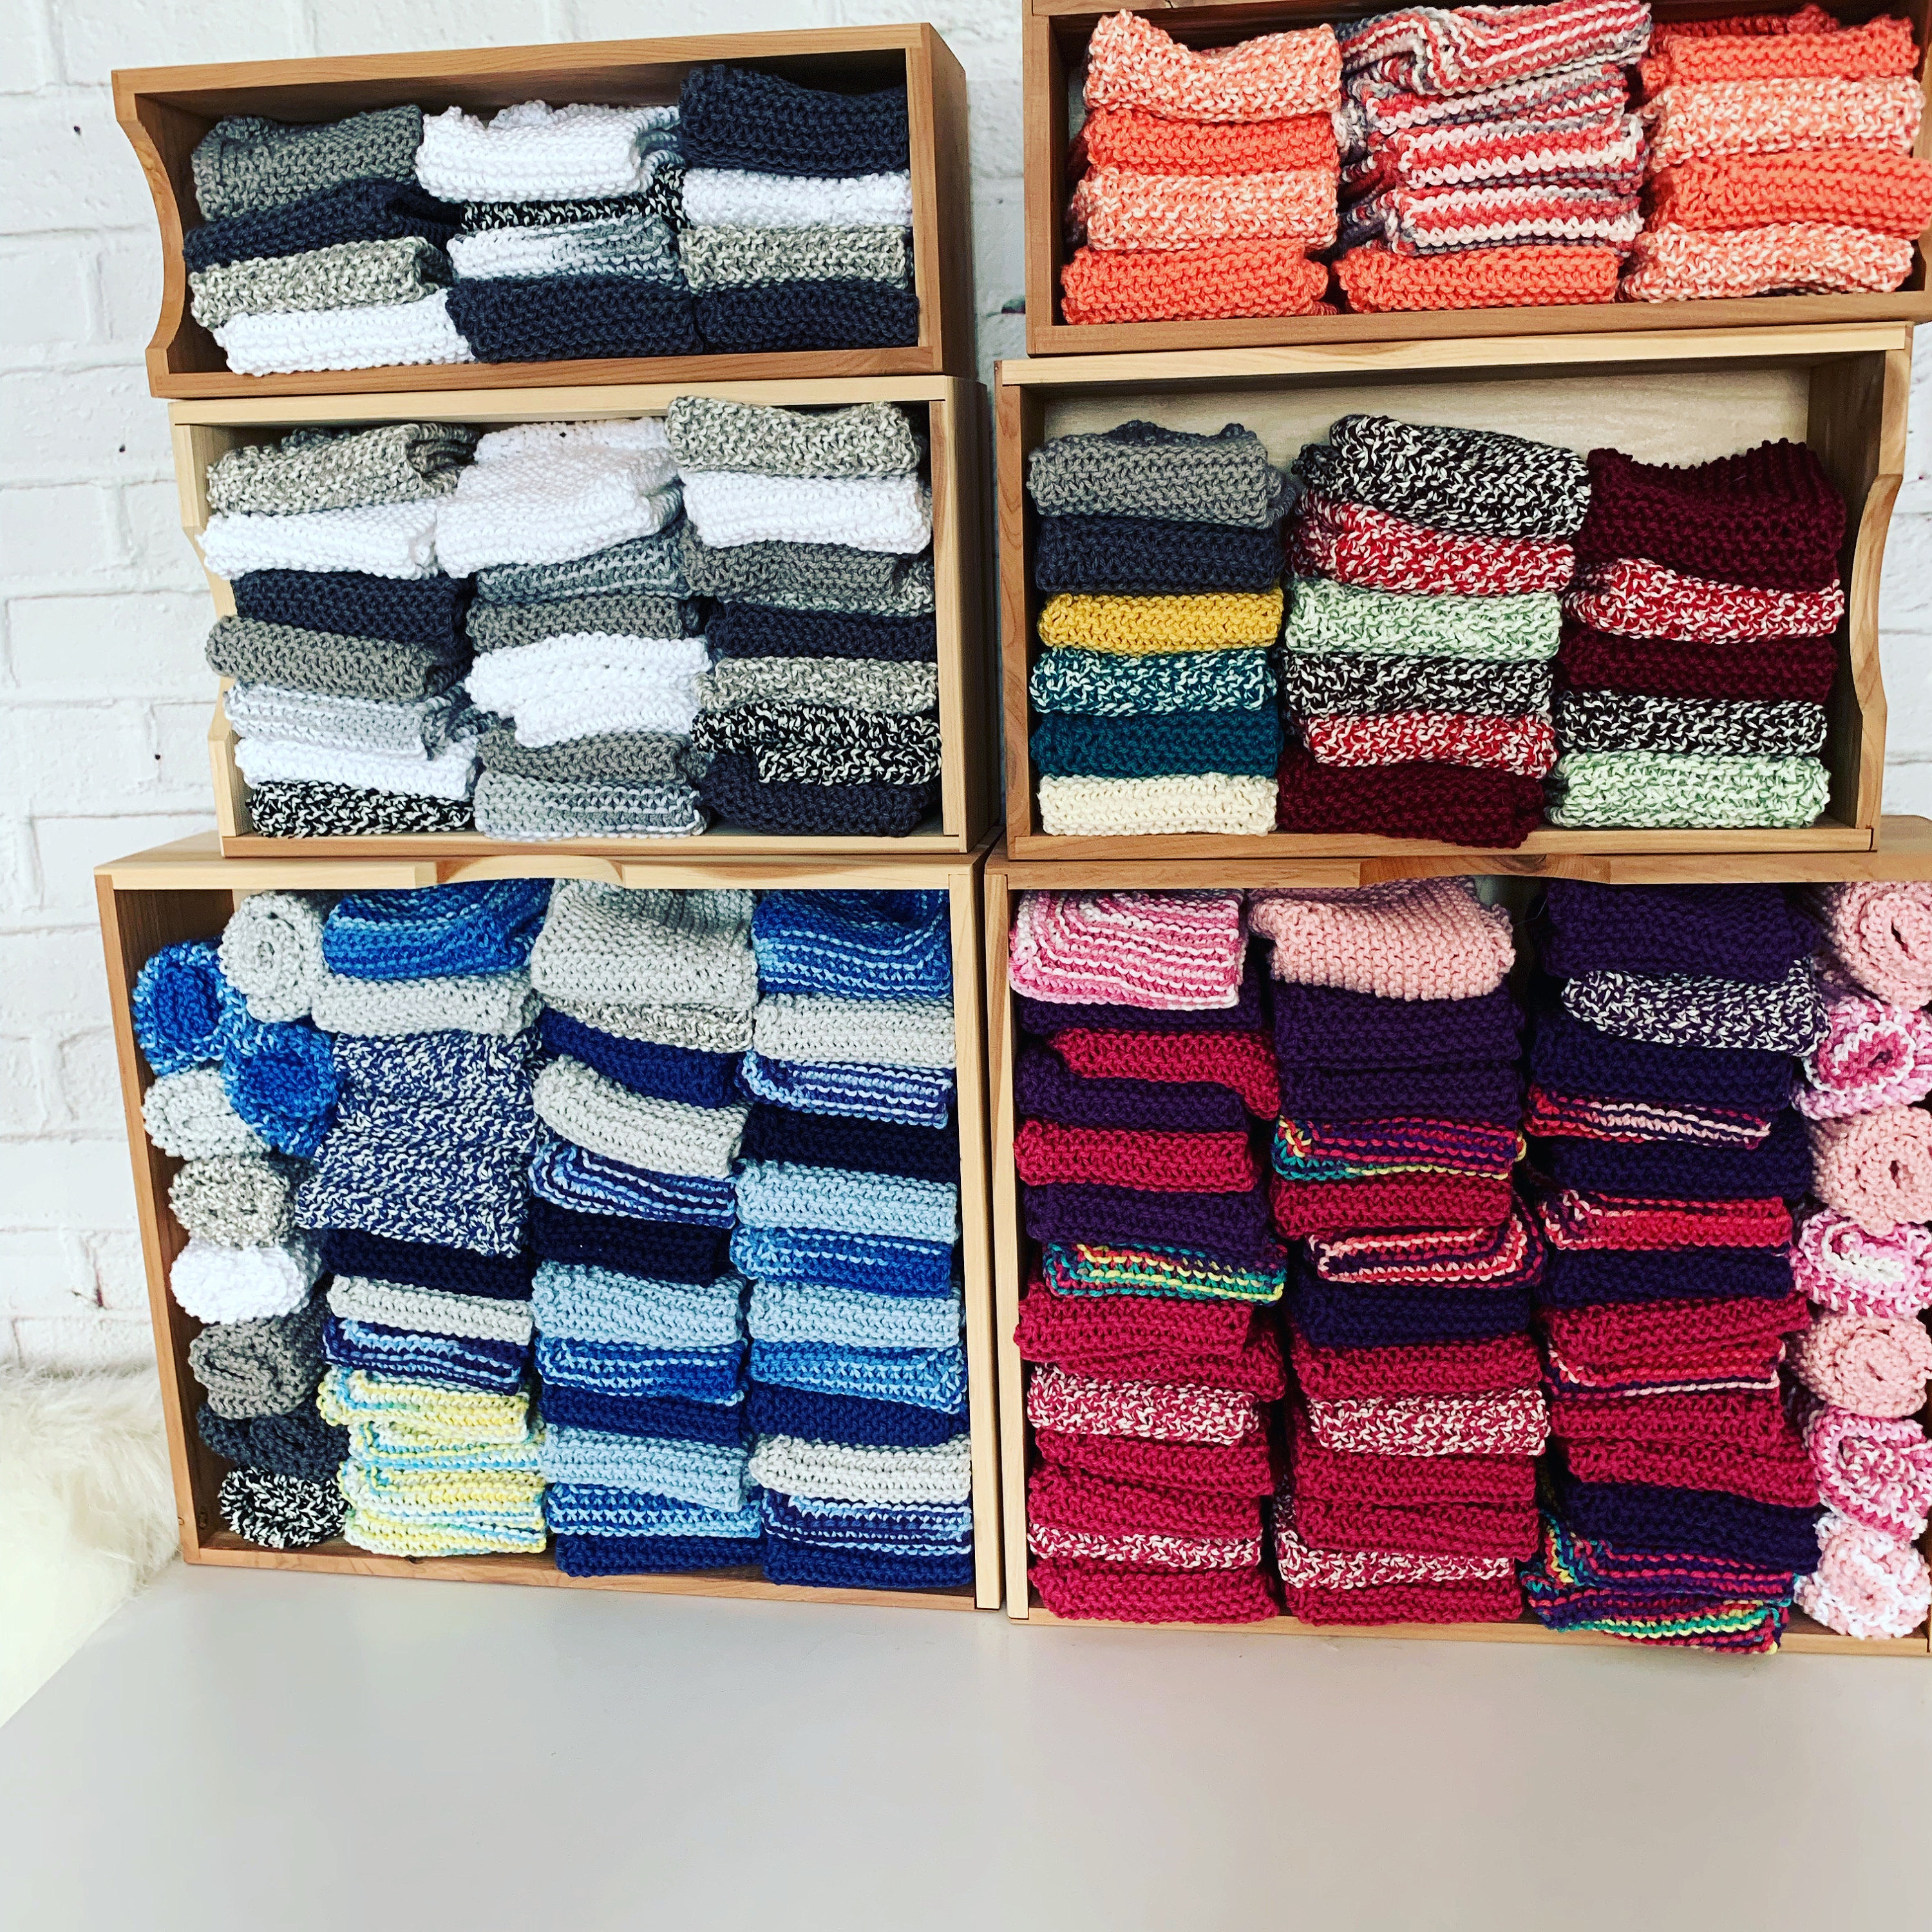 100% cotton hand knit dishcloths